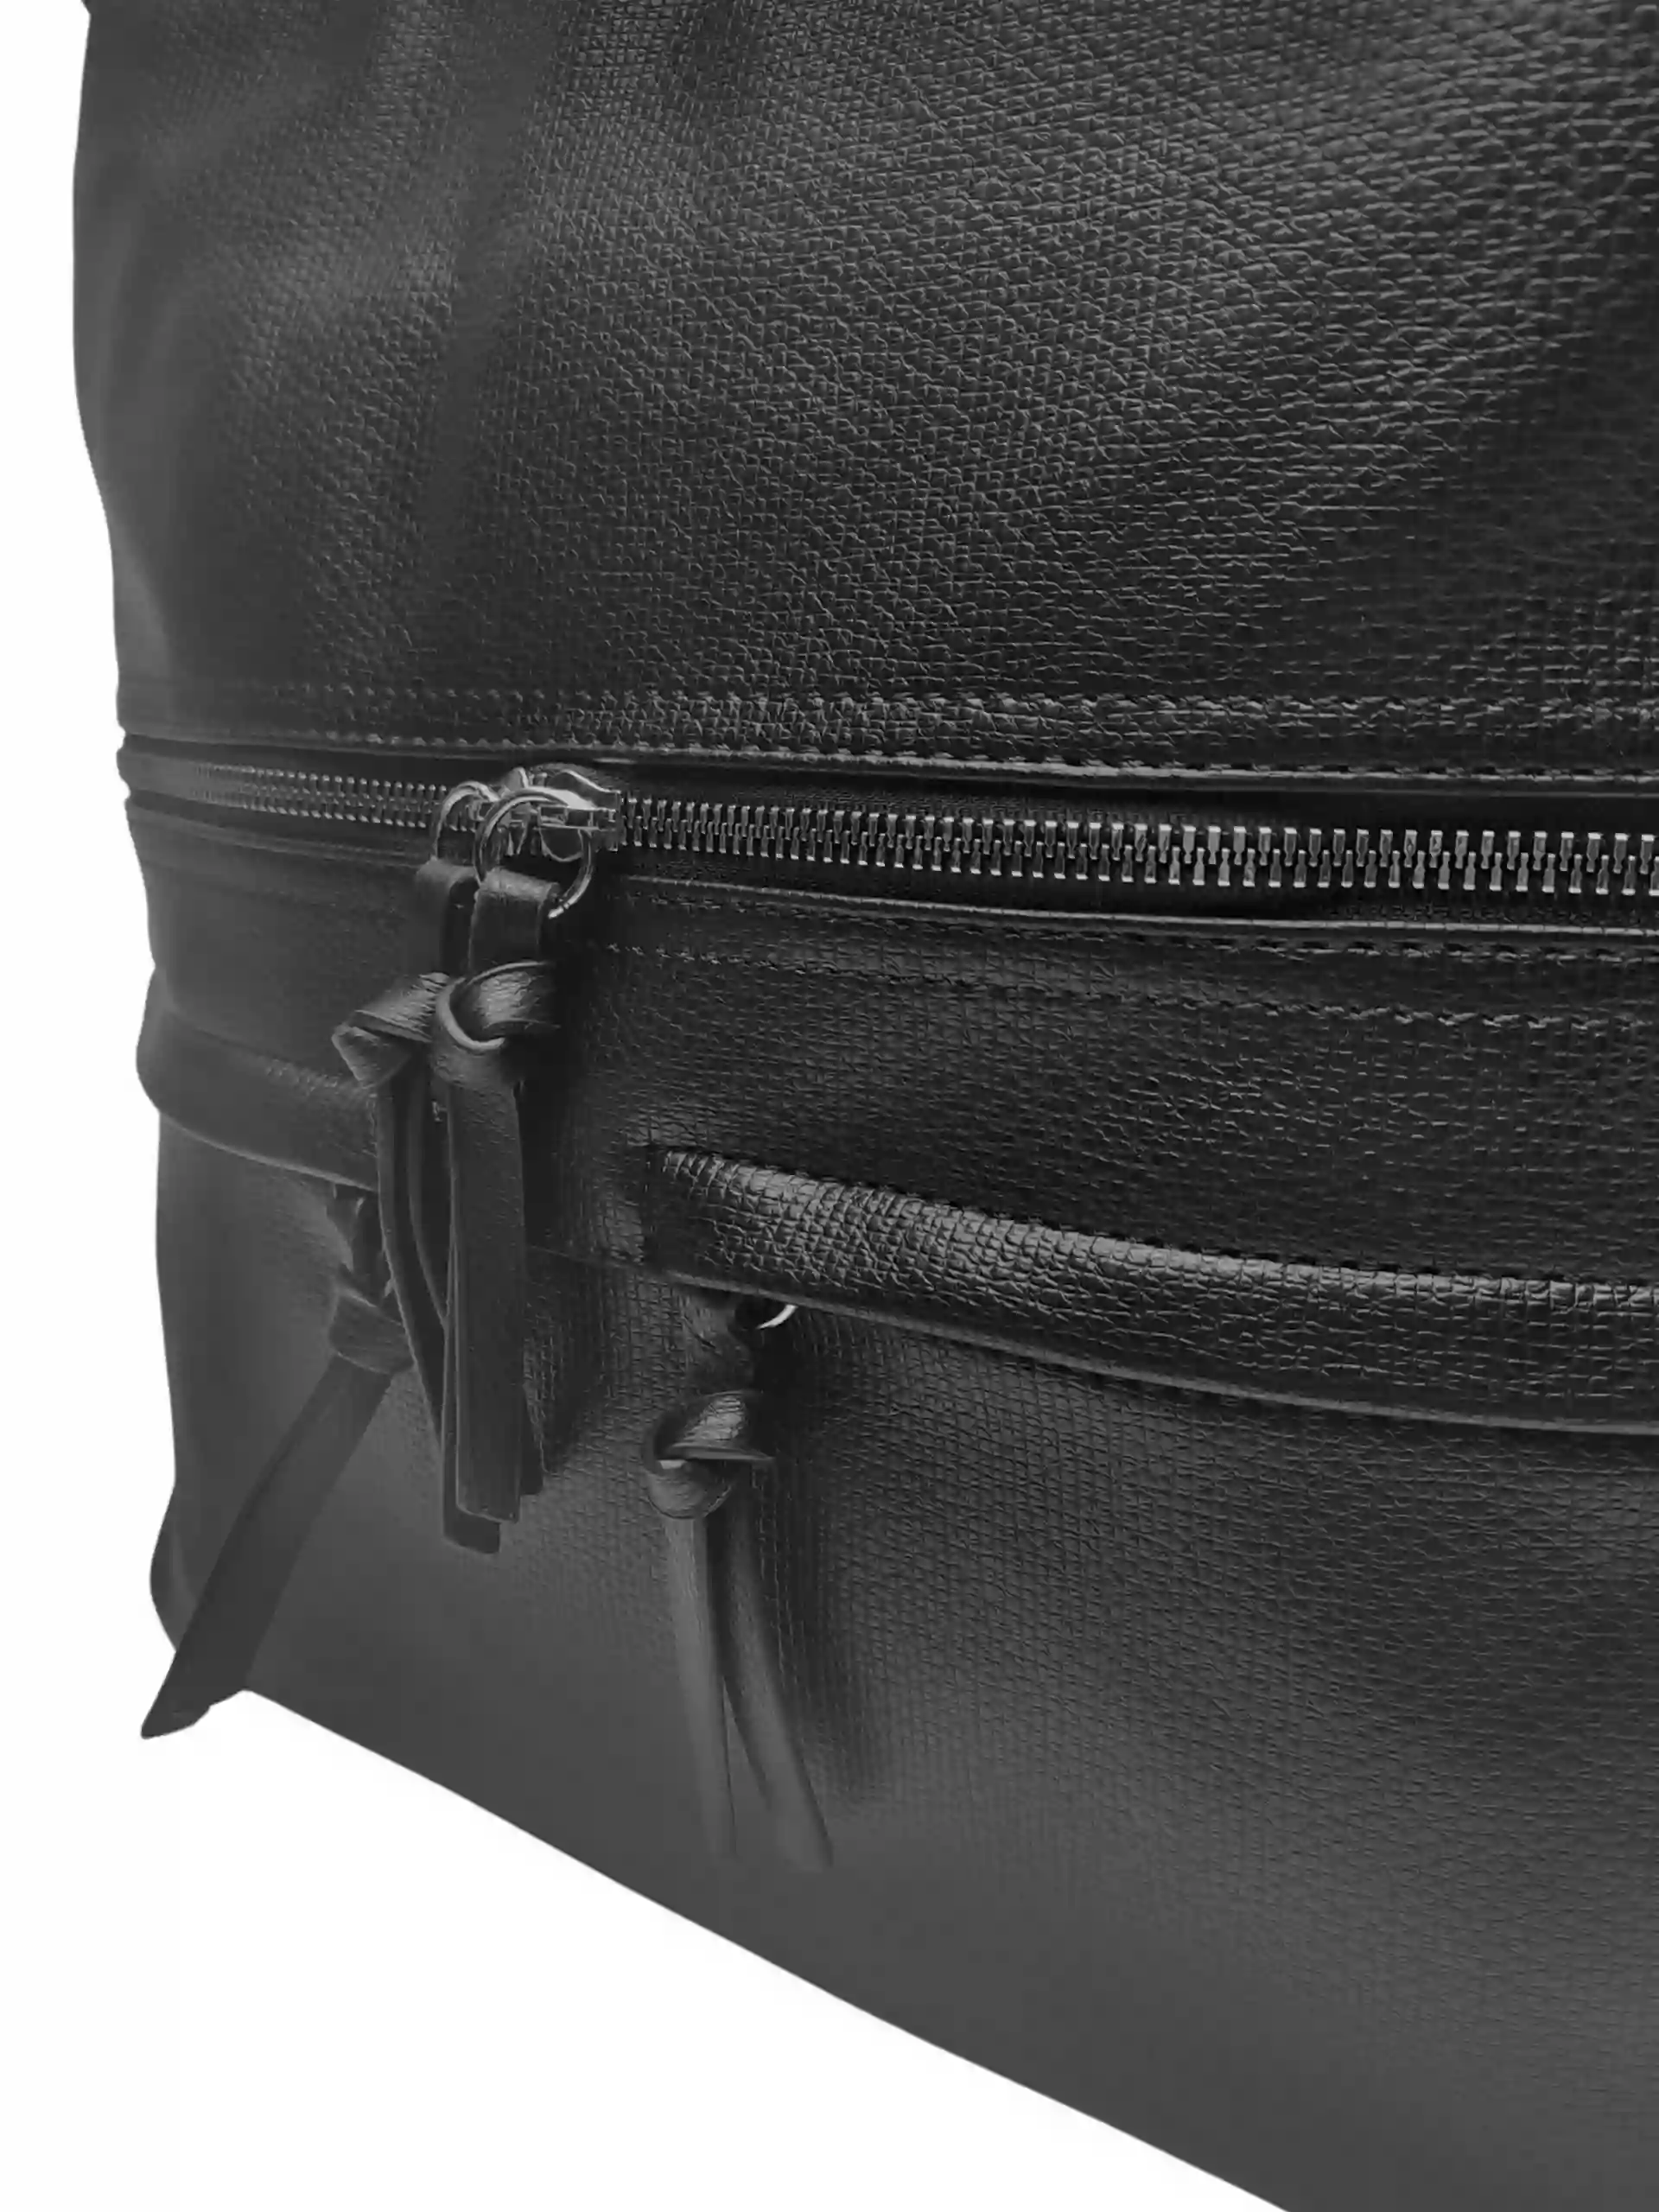 Velký černý kabelko-batoh s kapsami, Tapple, H181175N2, detail kabelko-batohu